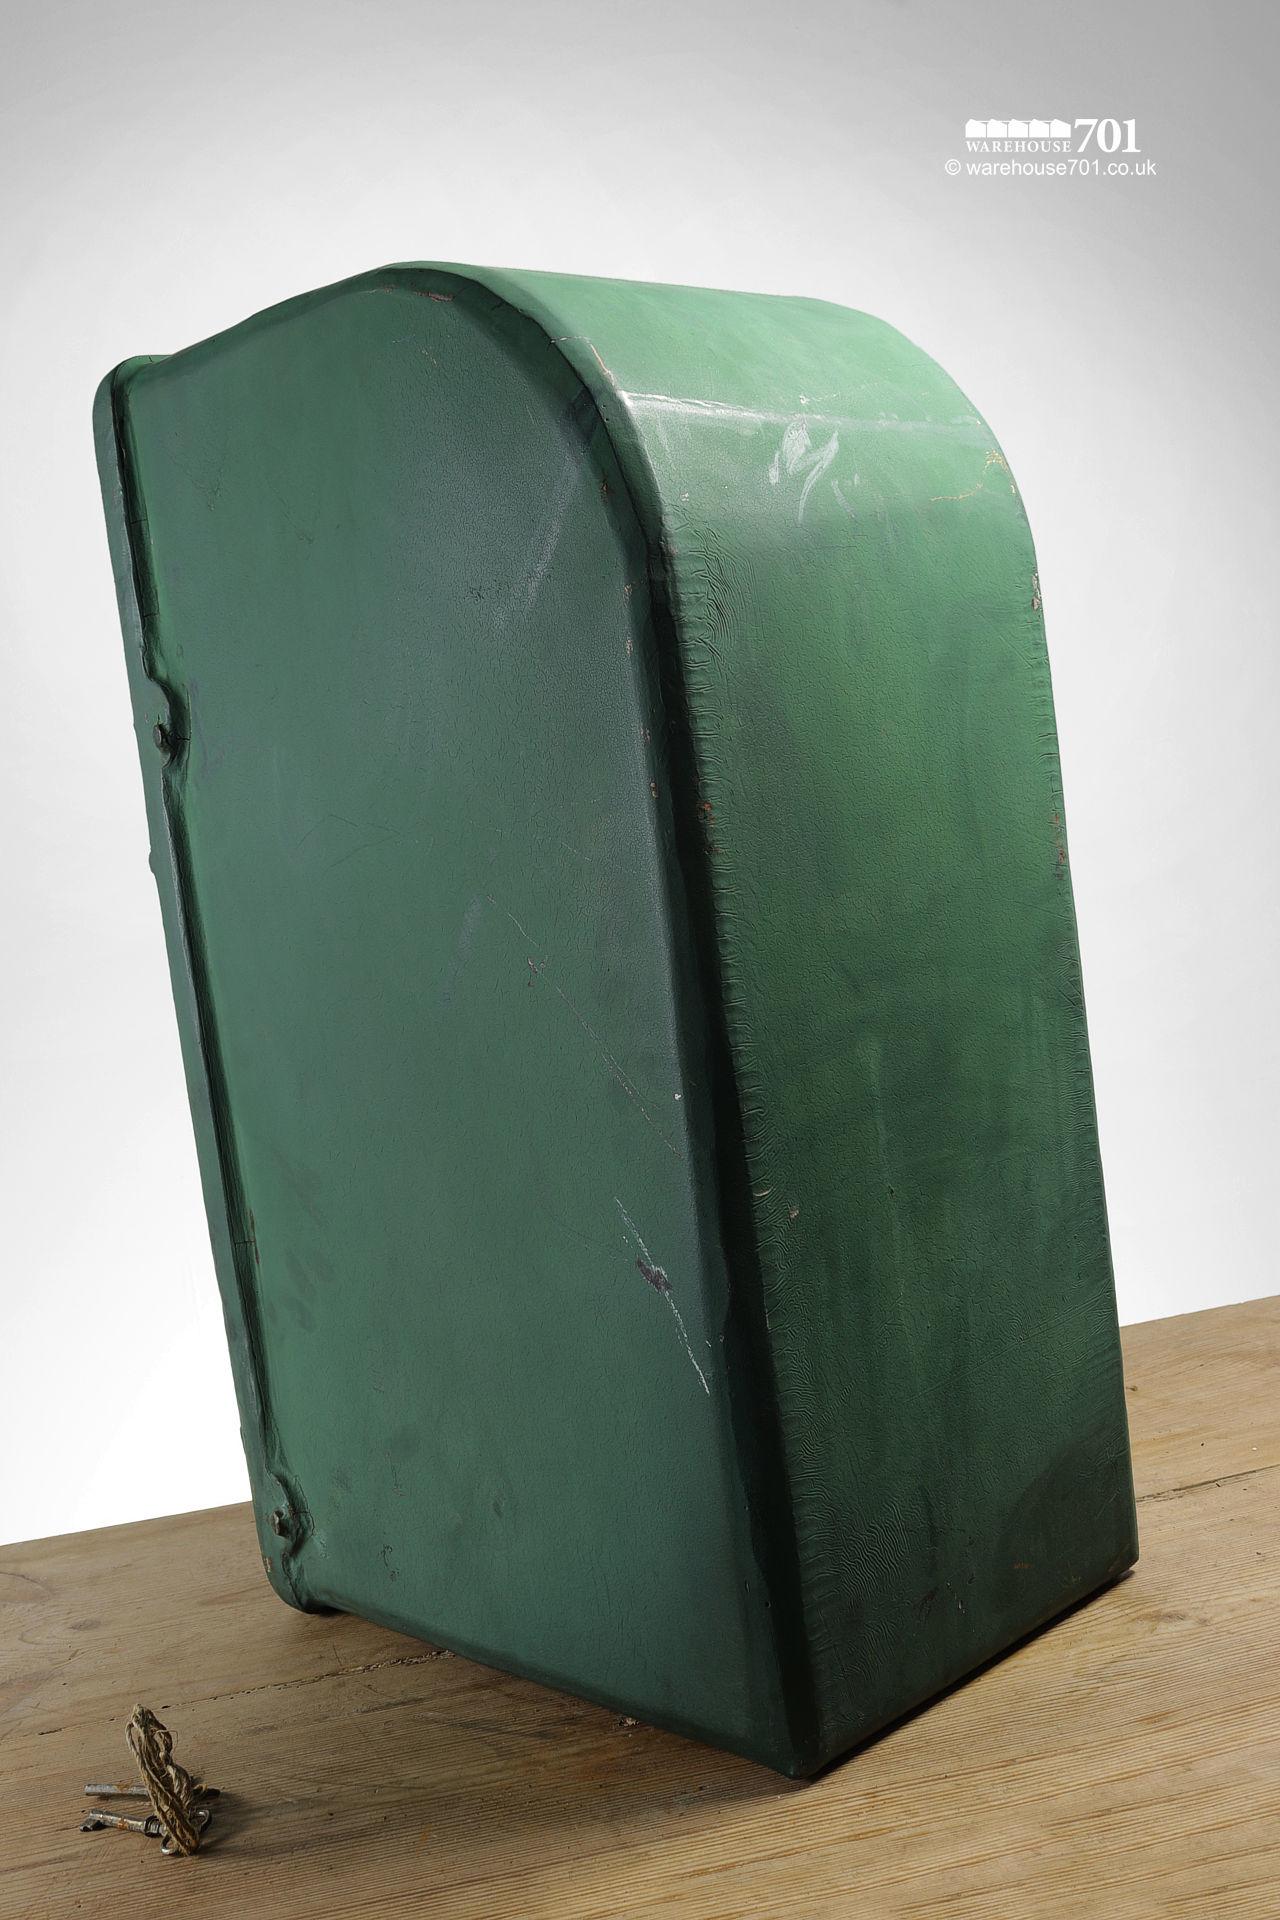 Vintage Style Green Cast Iron Irish Post Box #4